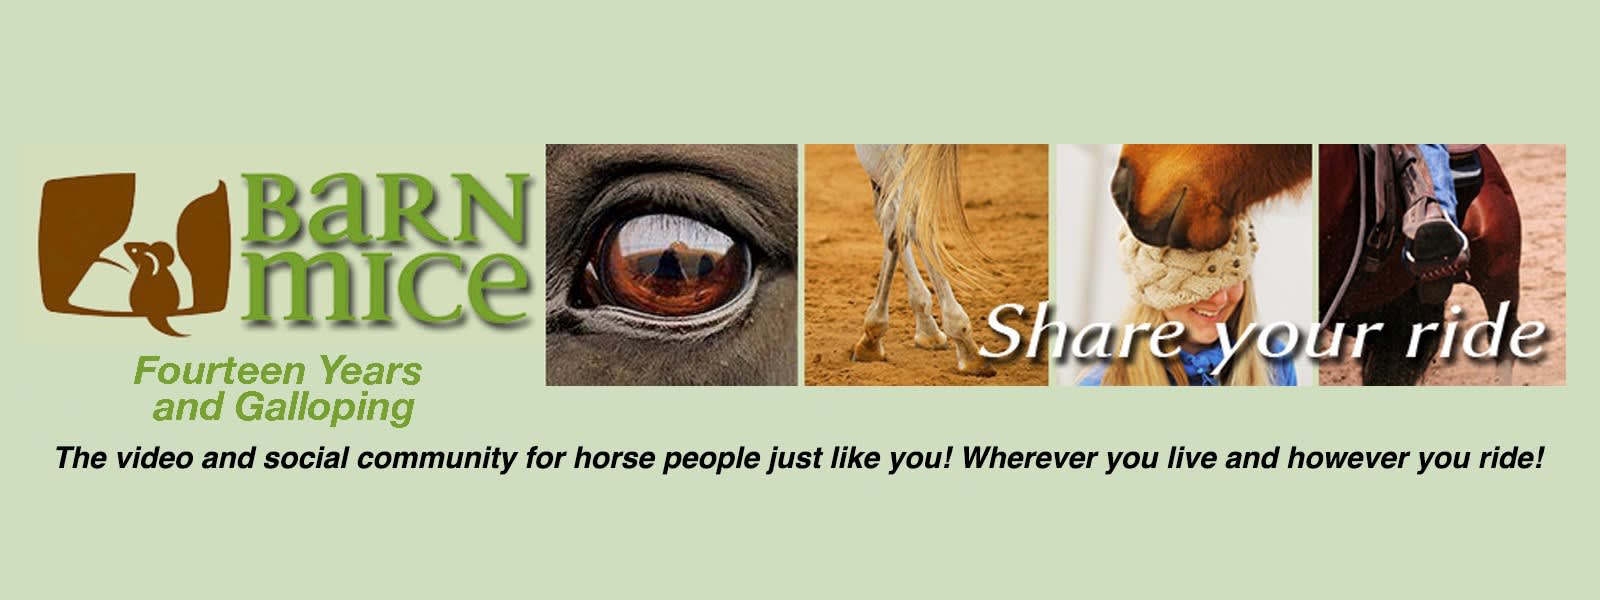 barn mice equestrian community banner